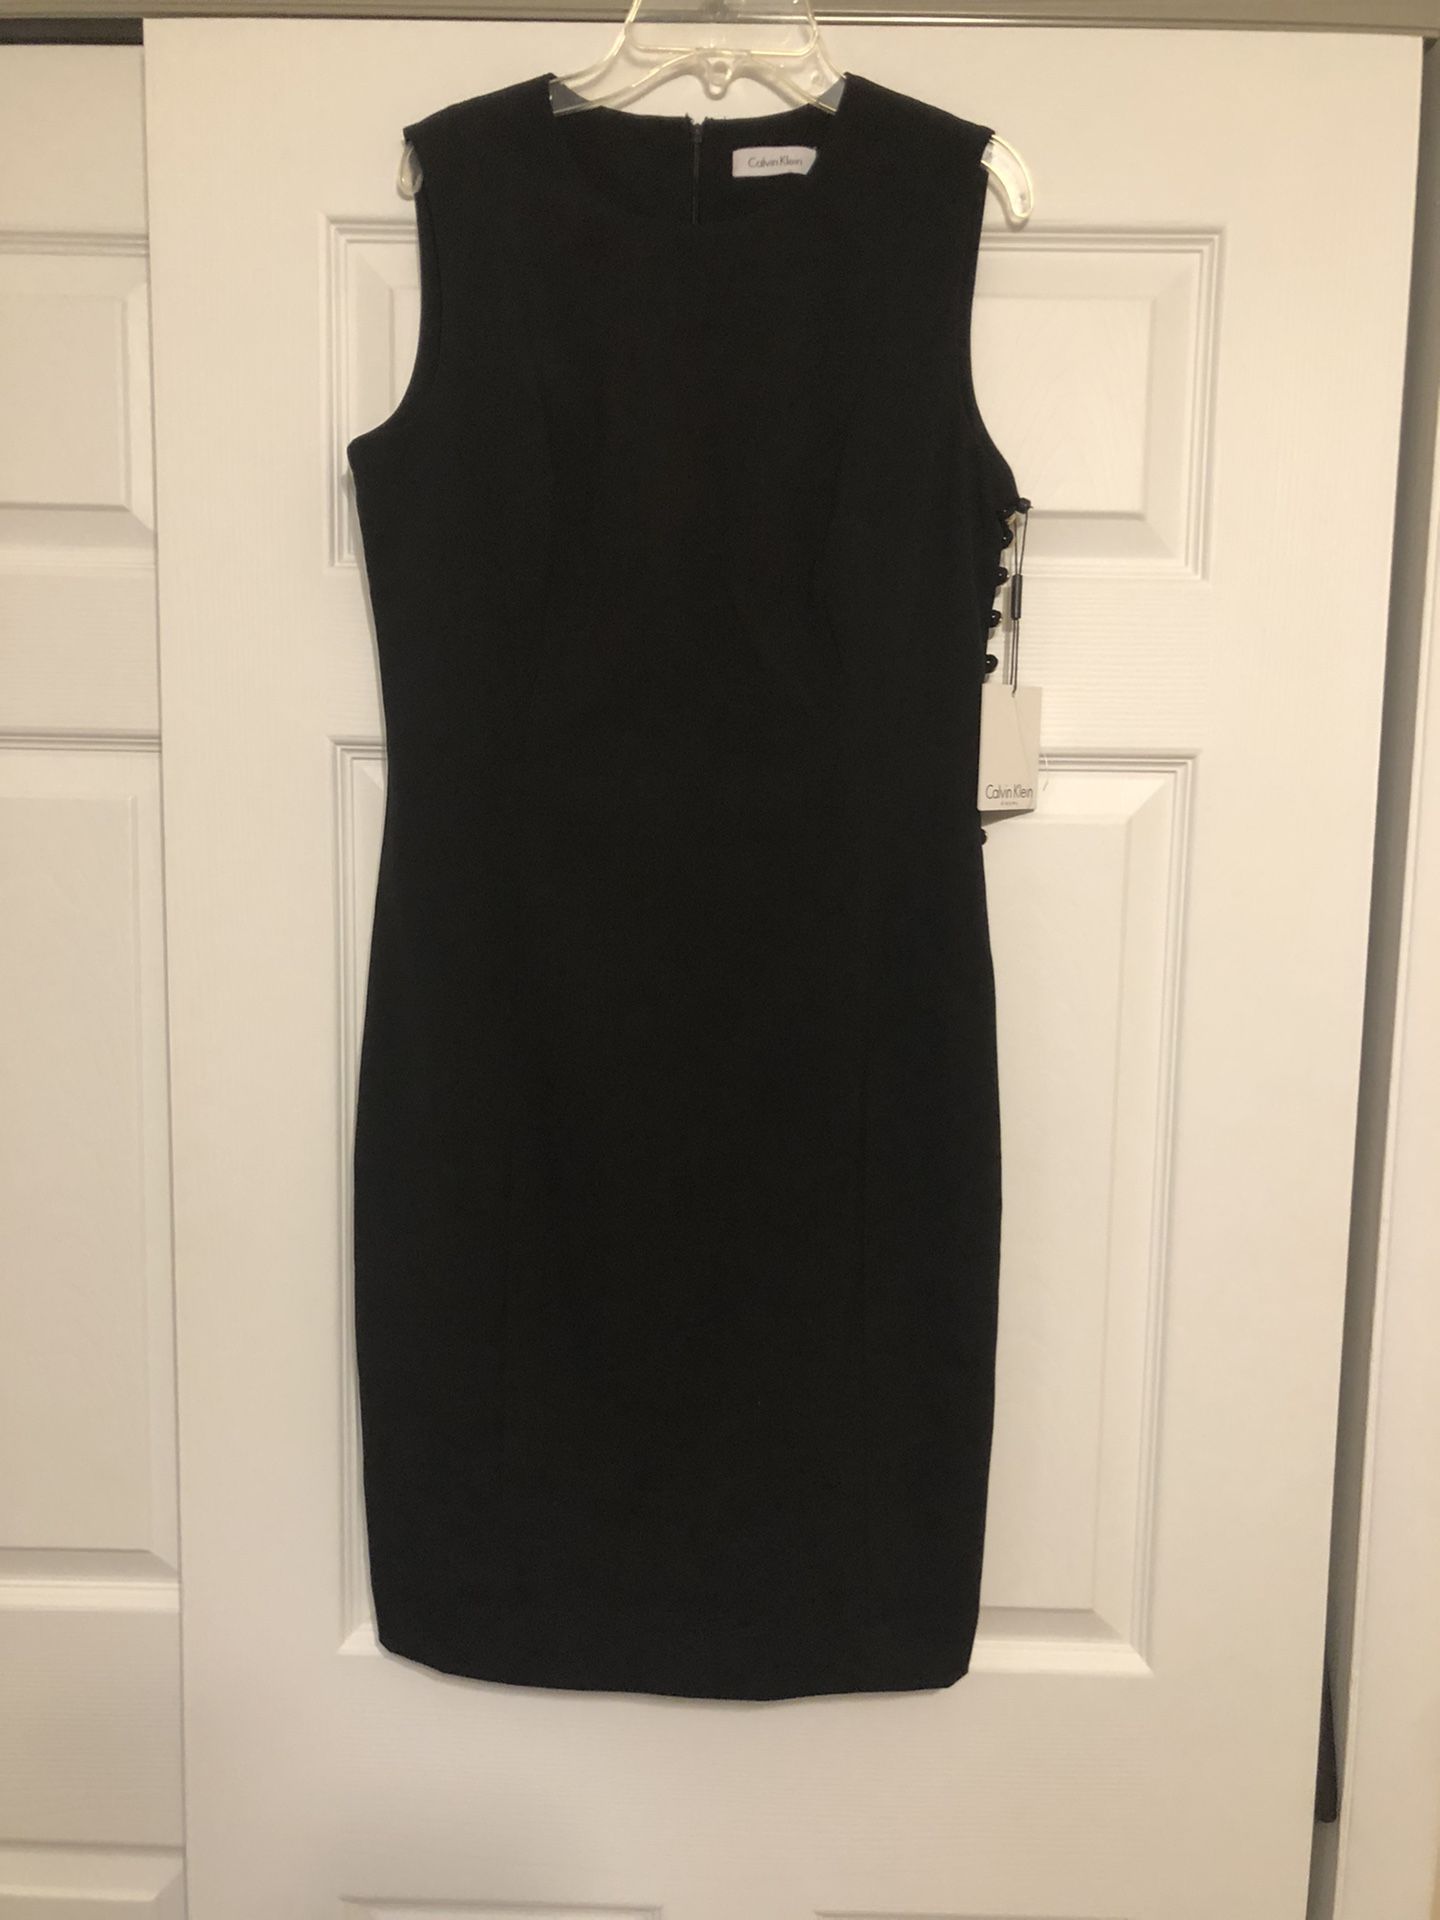 Brand New Calvin Klein Solid Black Dress - Size 4